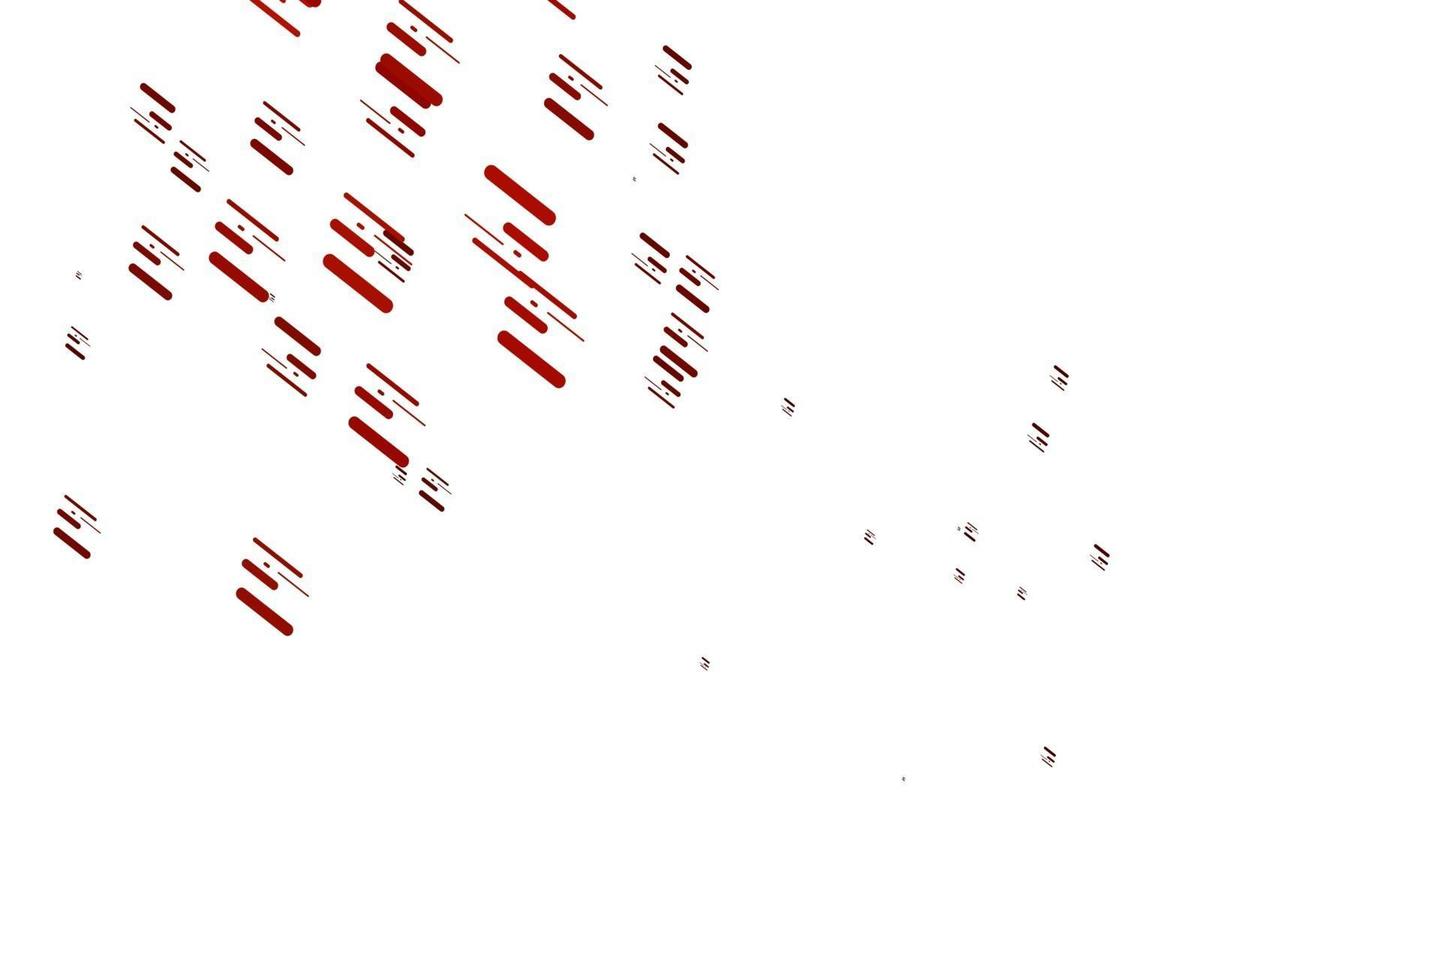 Telón de fondo de vector rojo claro con líneas largas.